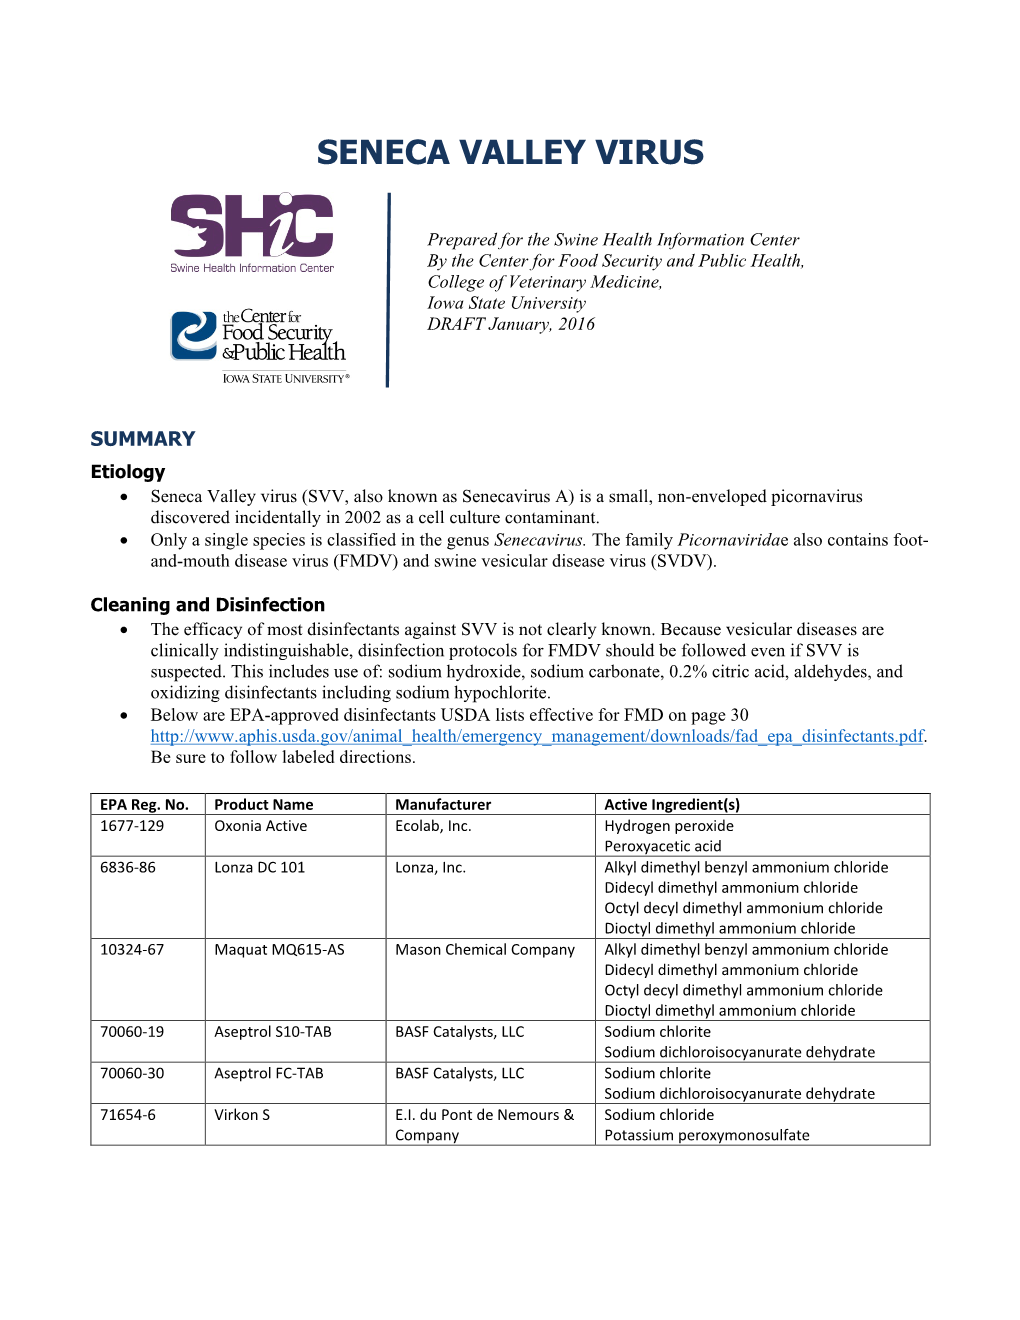 Seneca Valley Virus